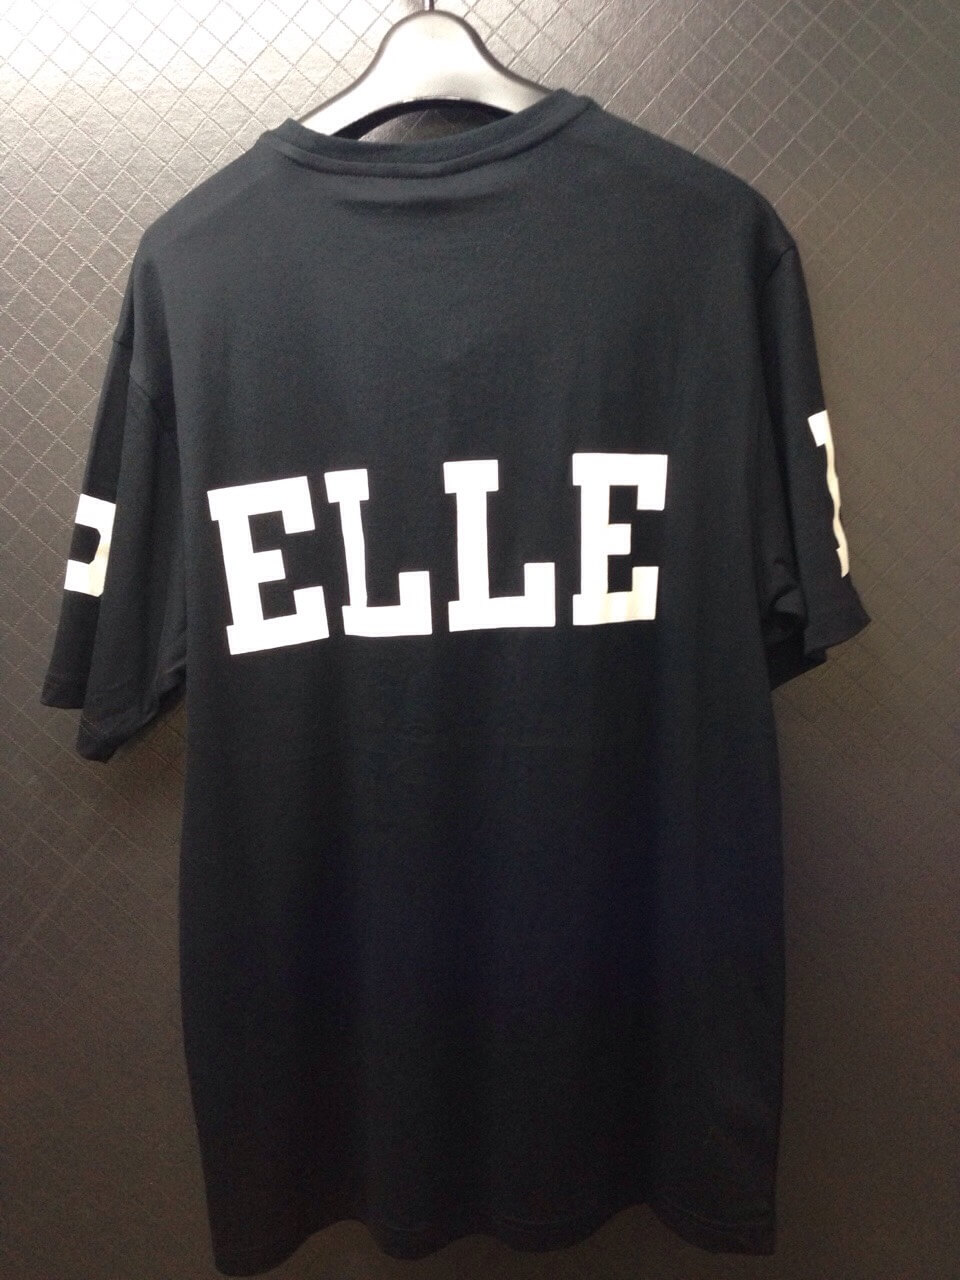 pelle_t-shirts-b01